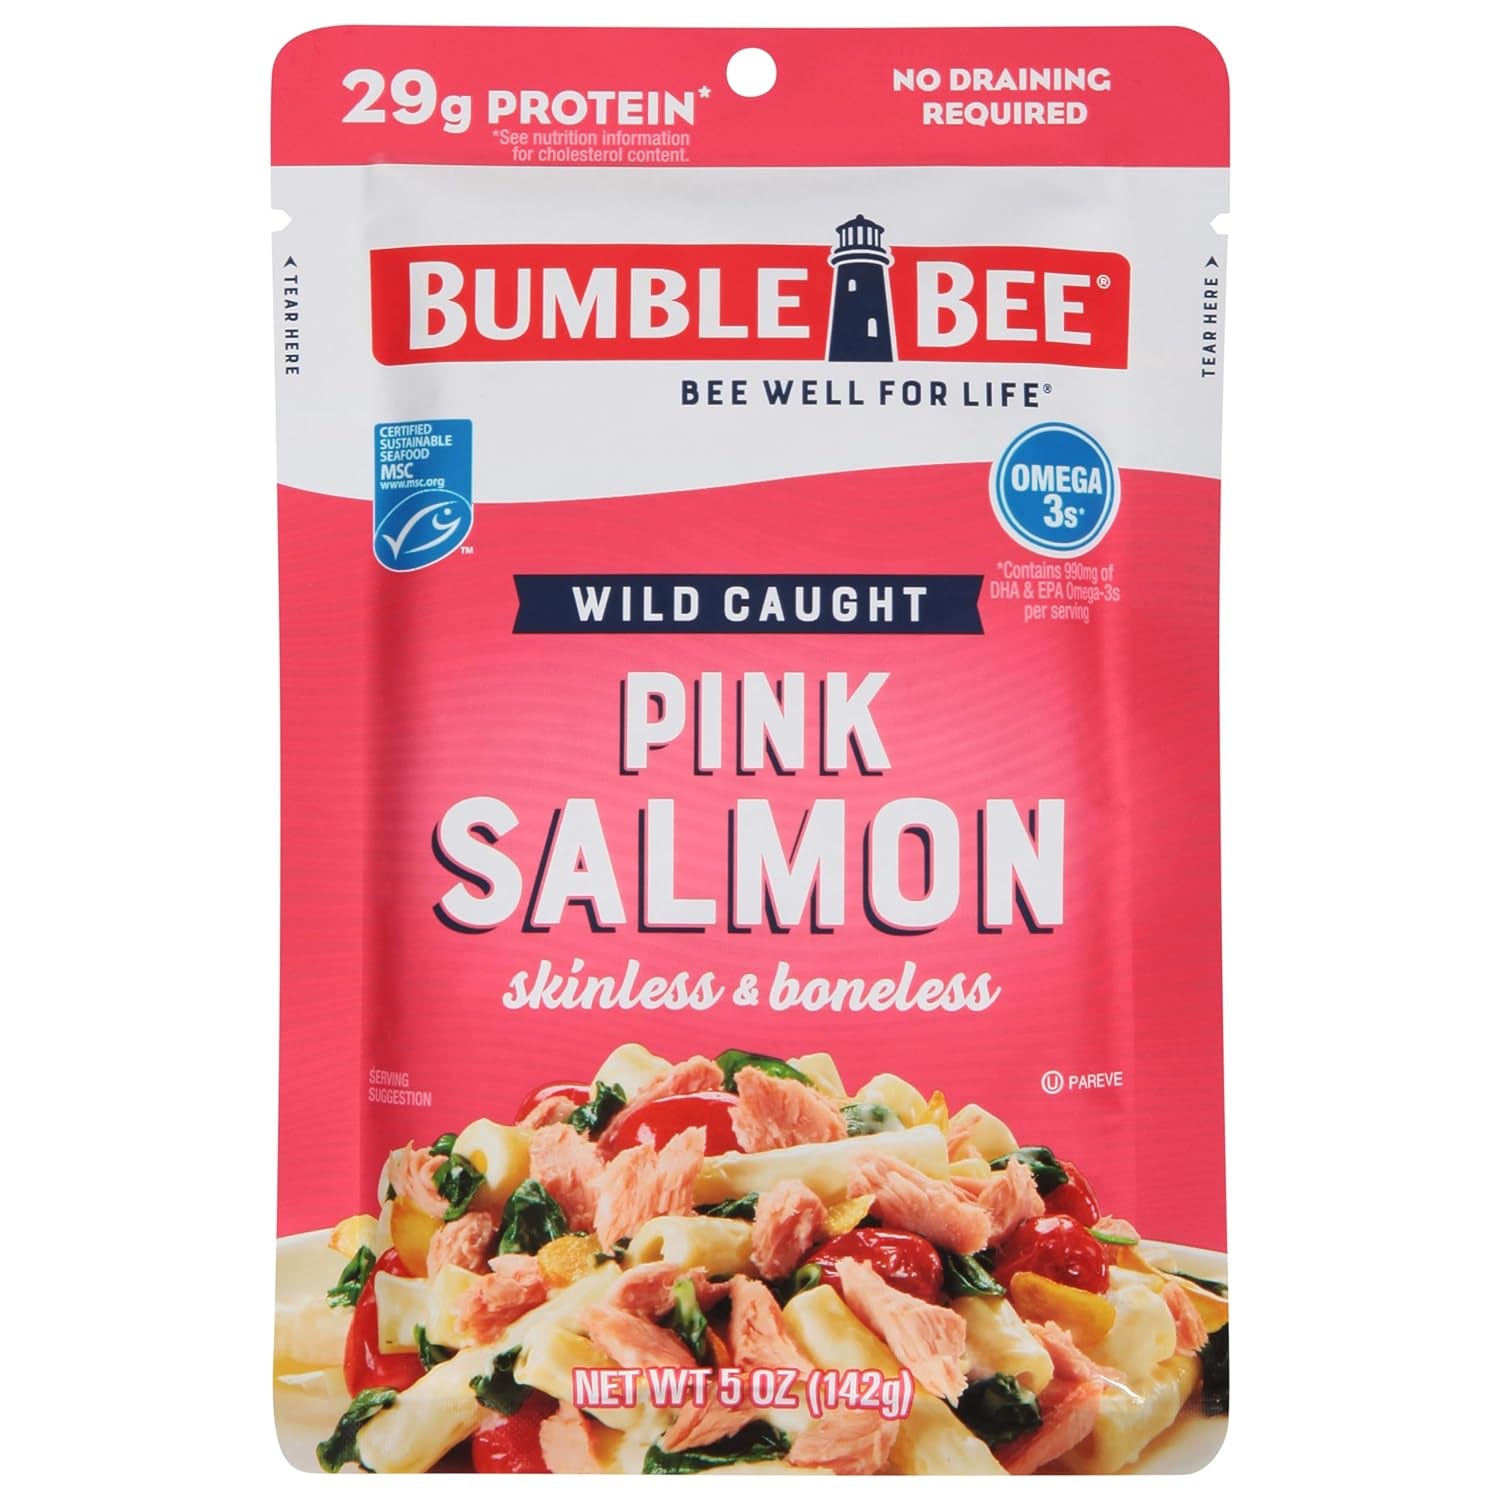 Skinless & Boneless Pink Salmon, 5 Oz Pouch (Pack of 12) - Premium Wild Caught Salmon for Snacks, Sandwiches & Recipes - 29G Protein per Serving - Gluten Free, Kosher, MSC Certified